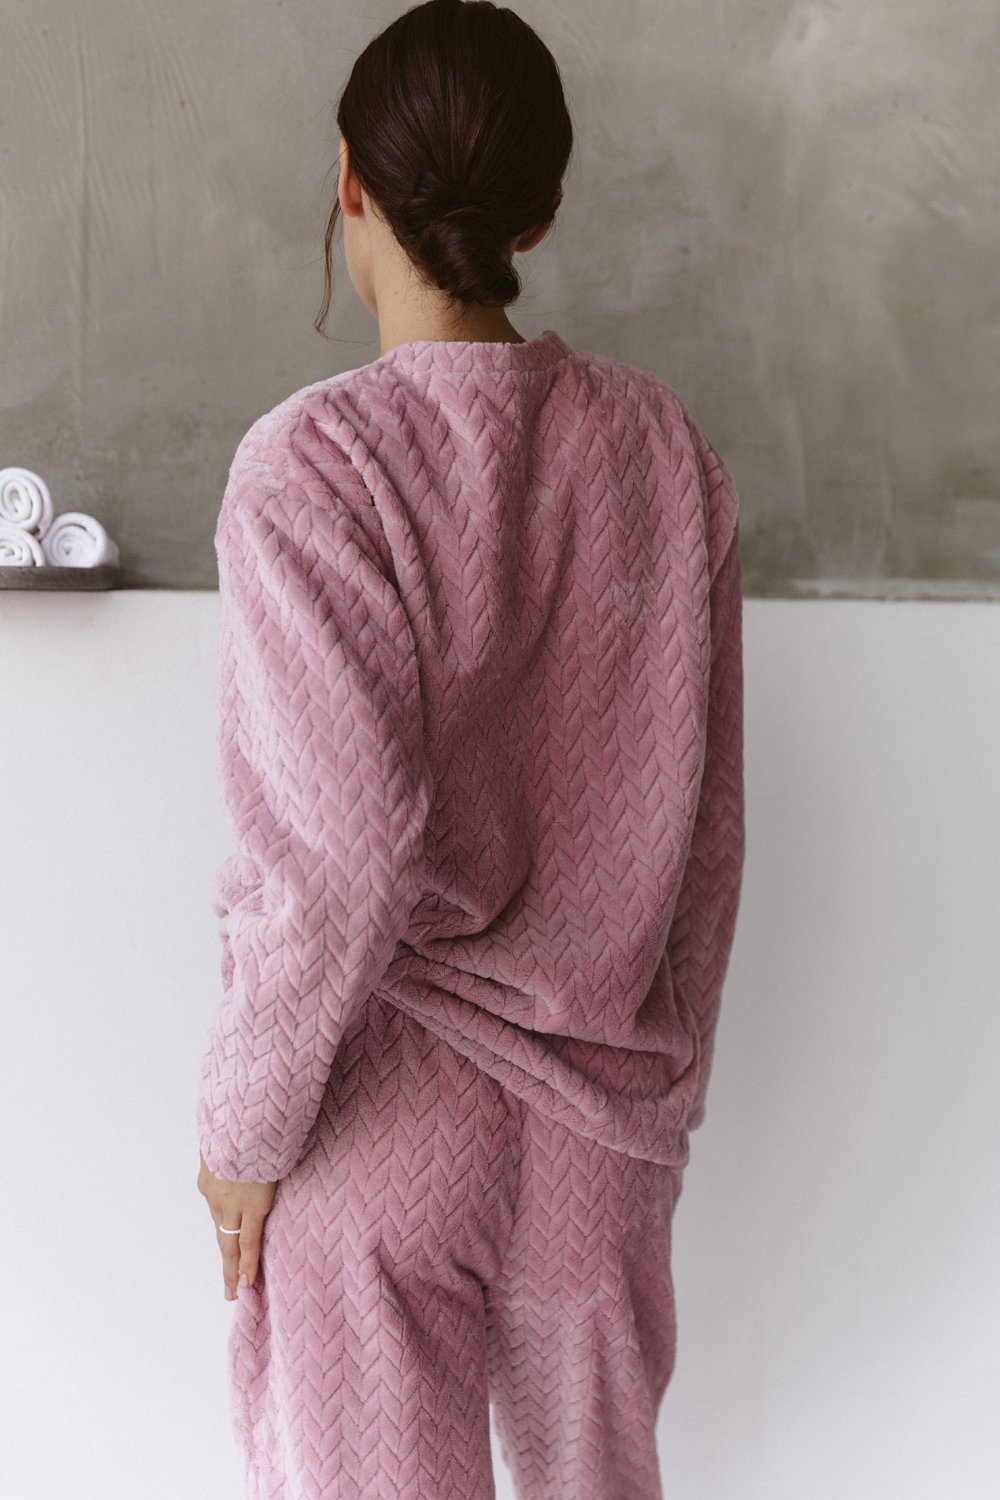 Warm pajamas in the color 